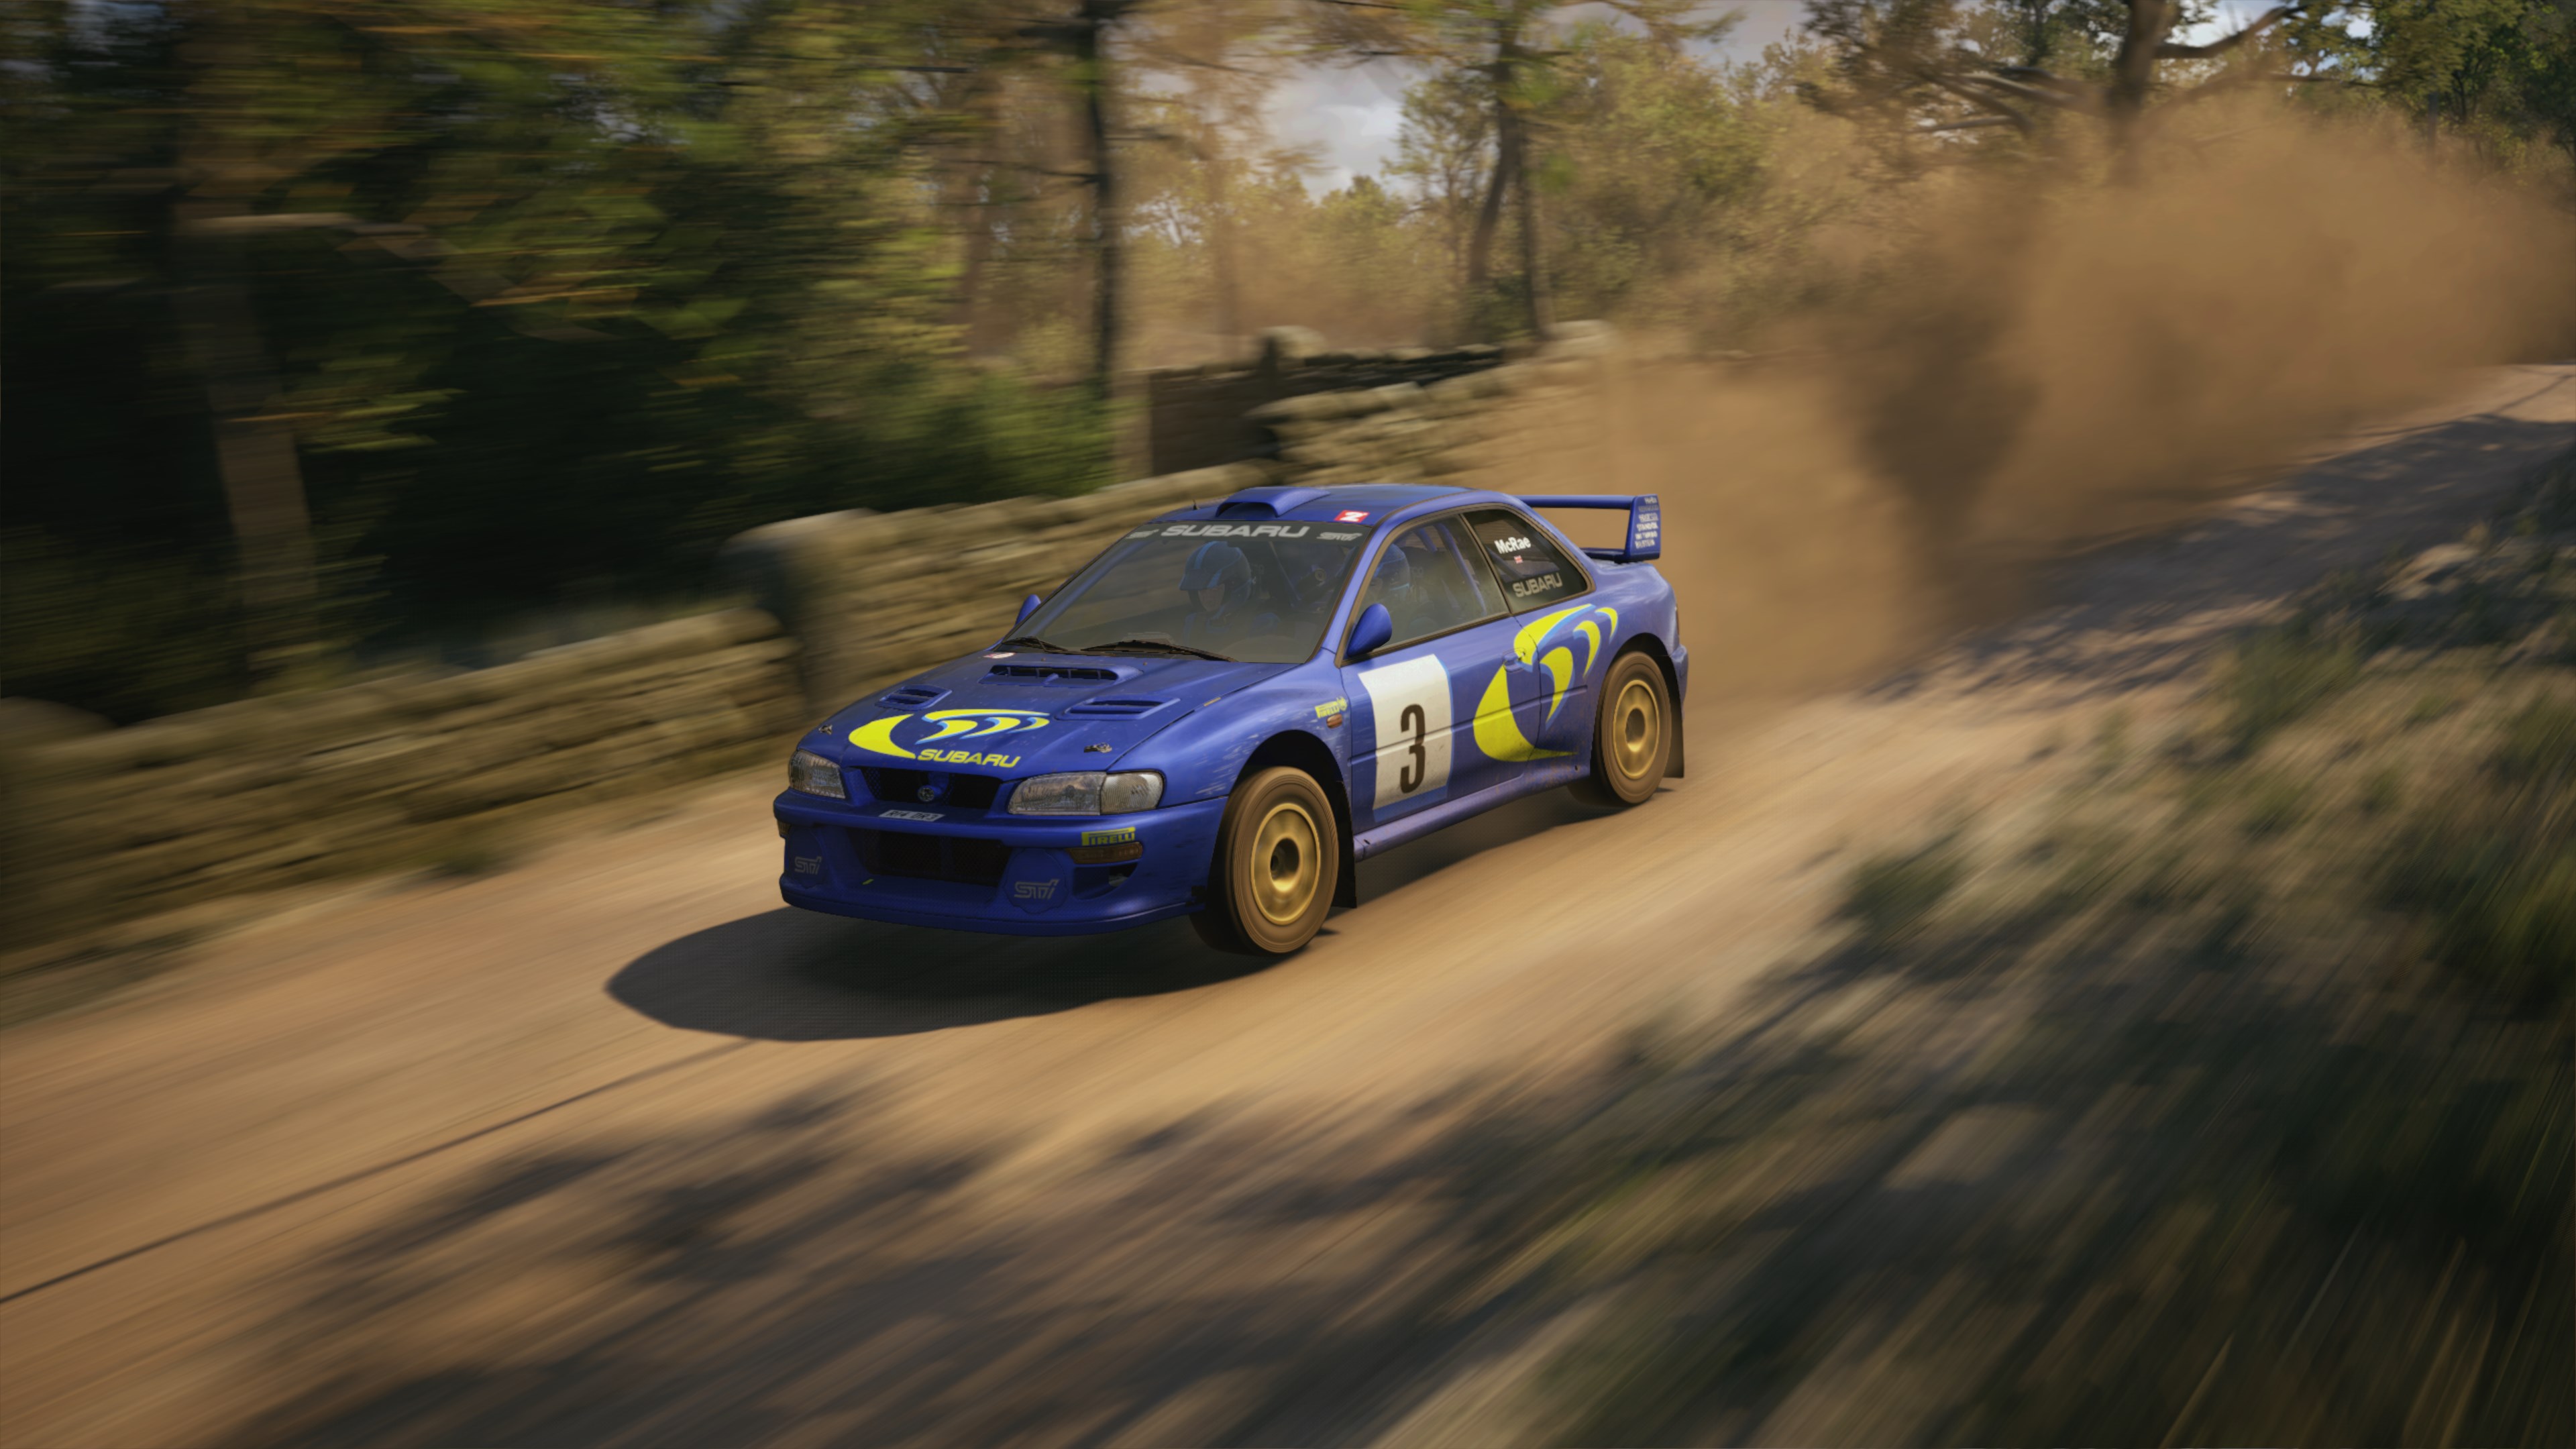 EA Sports WRC 23 Steam Account